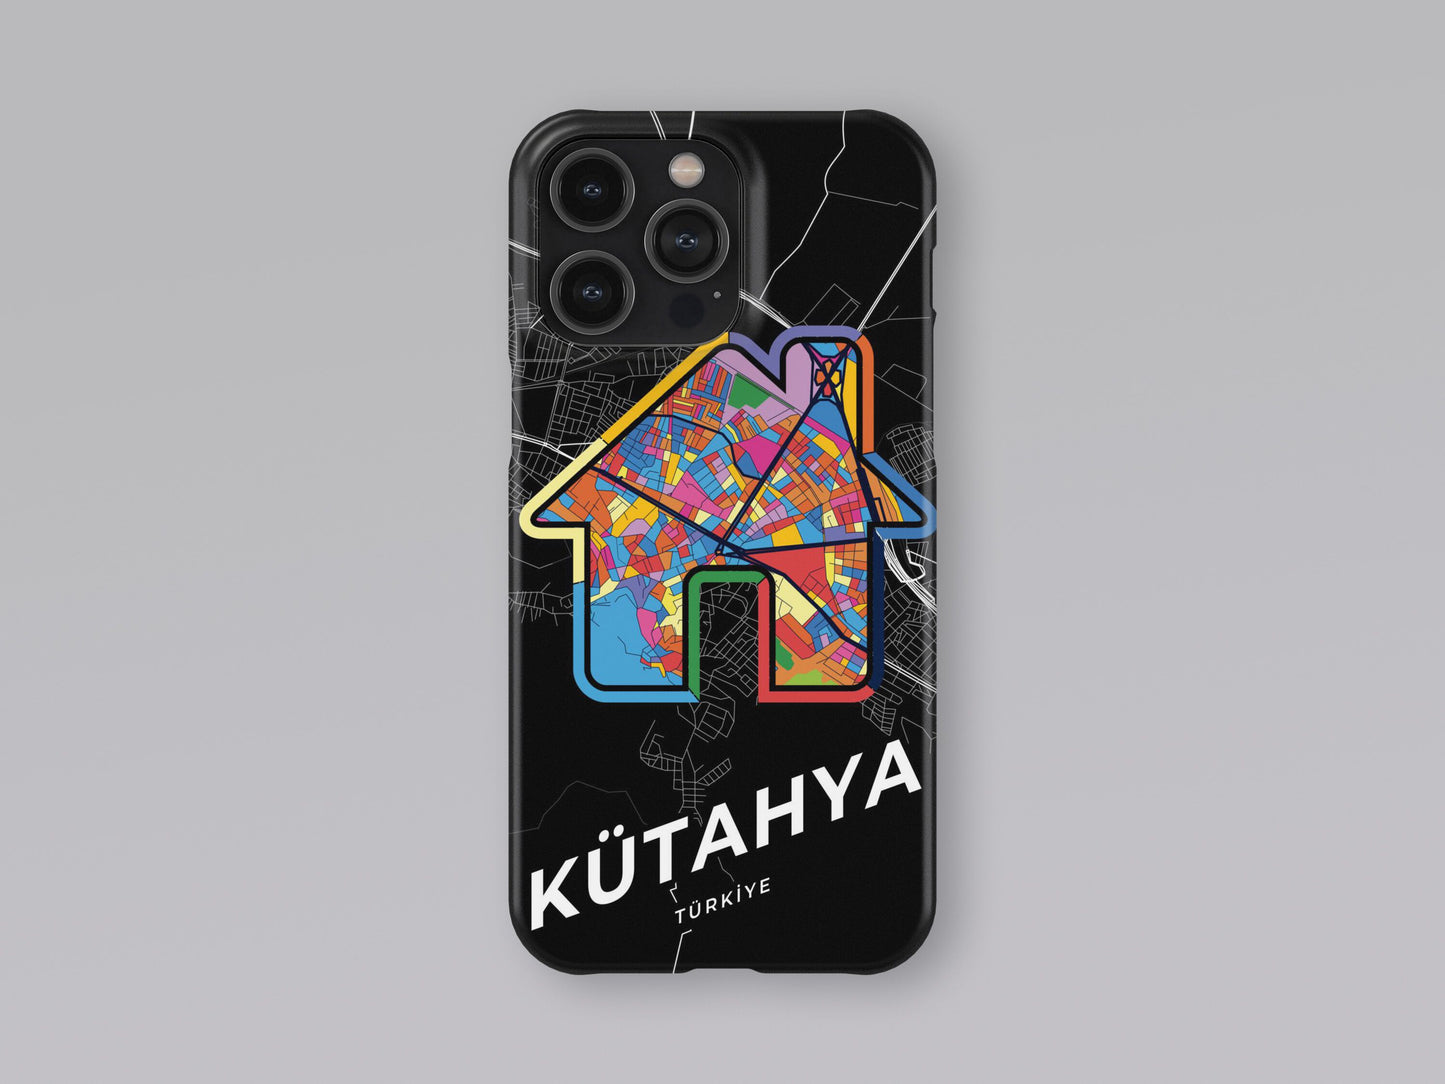 Kütahya Turkey slim phone case with colorful icon. Birthday, wedding or housewarming gift. Couple match cases. 3